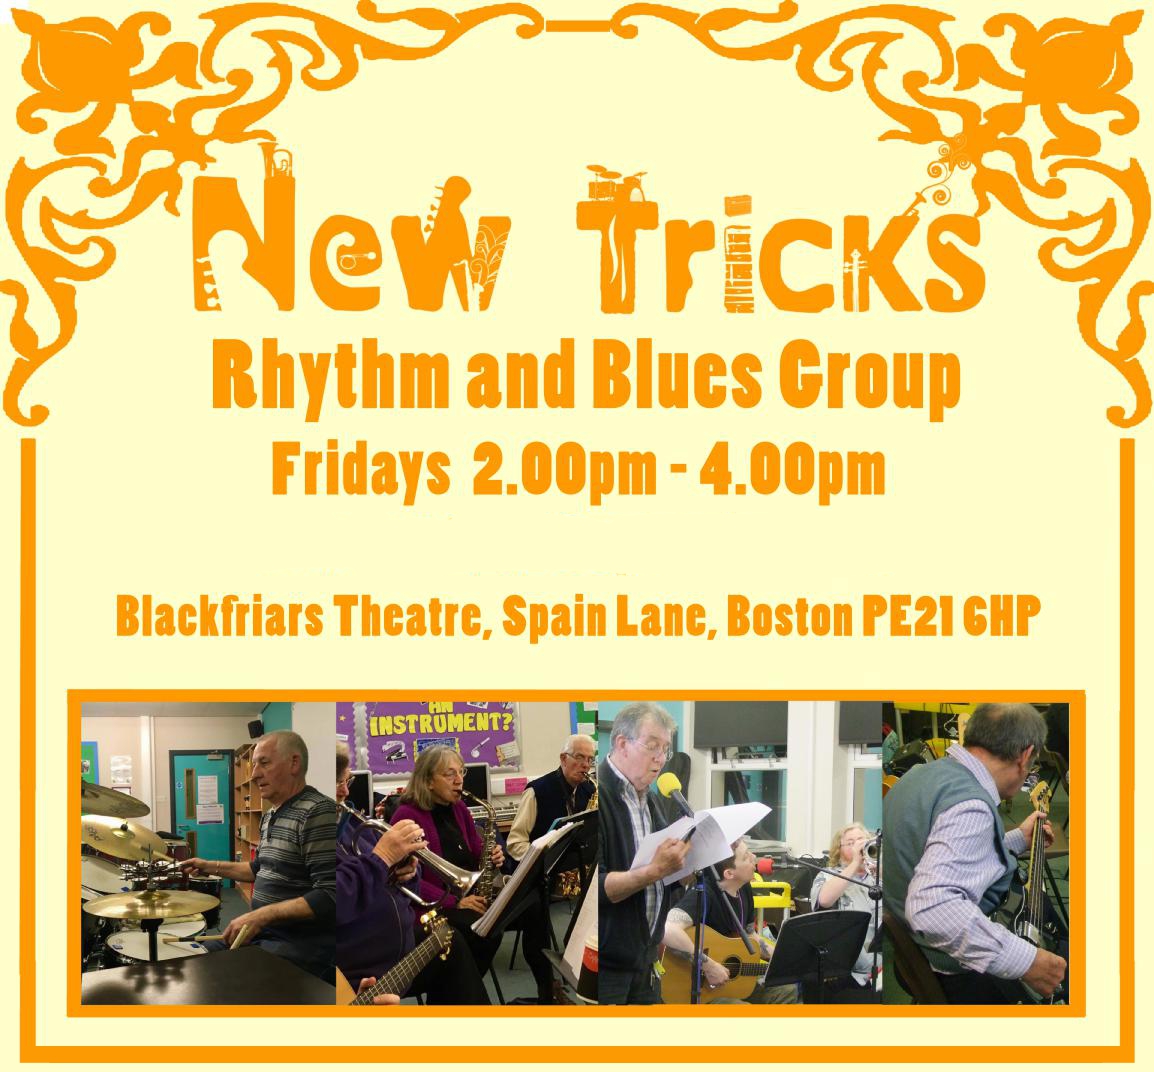 New Tricks - Rhythm and Blues Group - Continues at Blackfriars